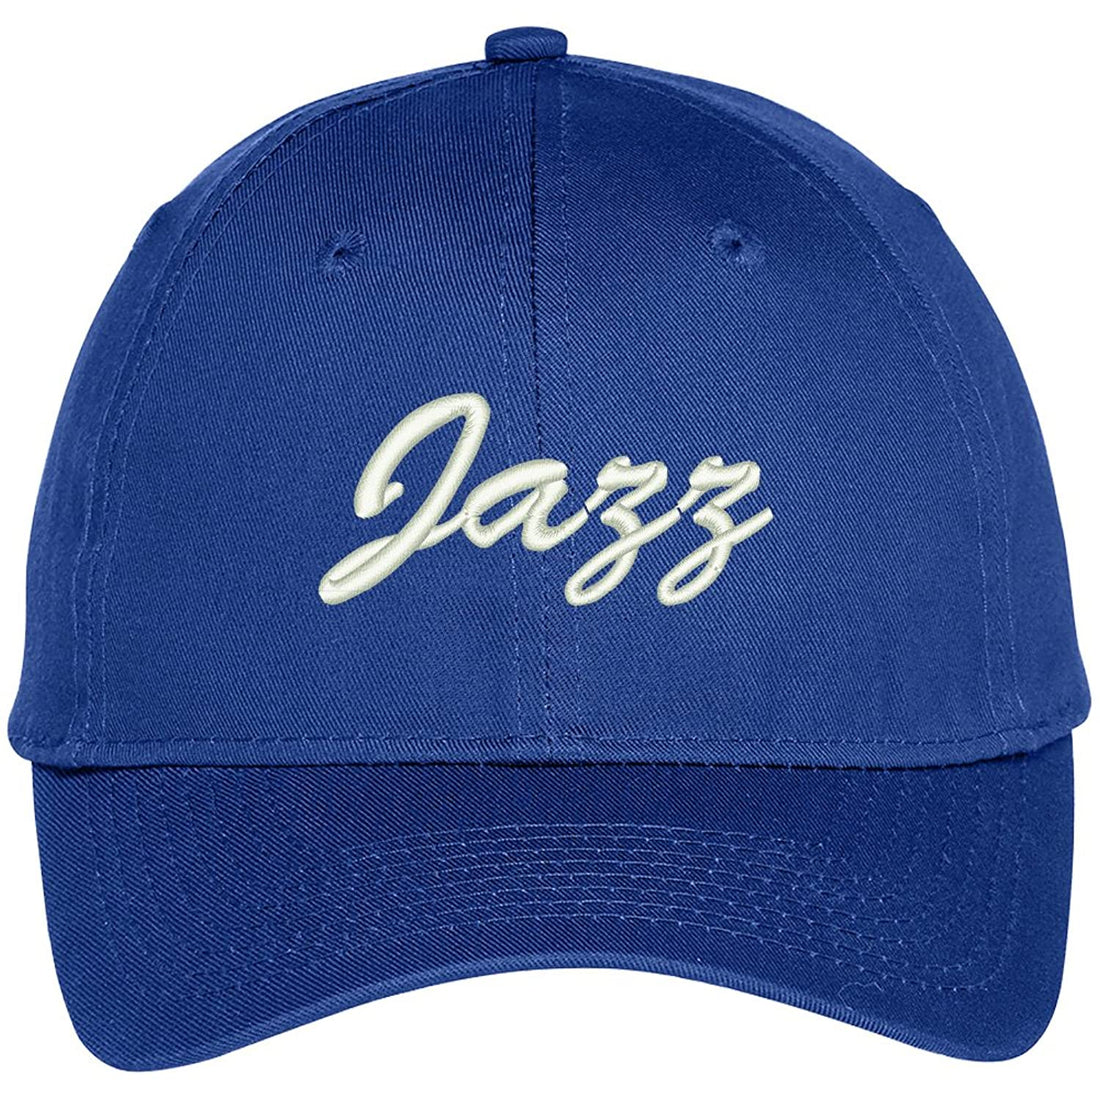 Trendy Apparel Shop Jazz Embroidered Precurved Adjustable Cap